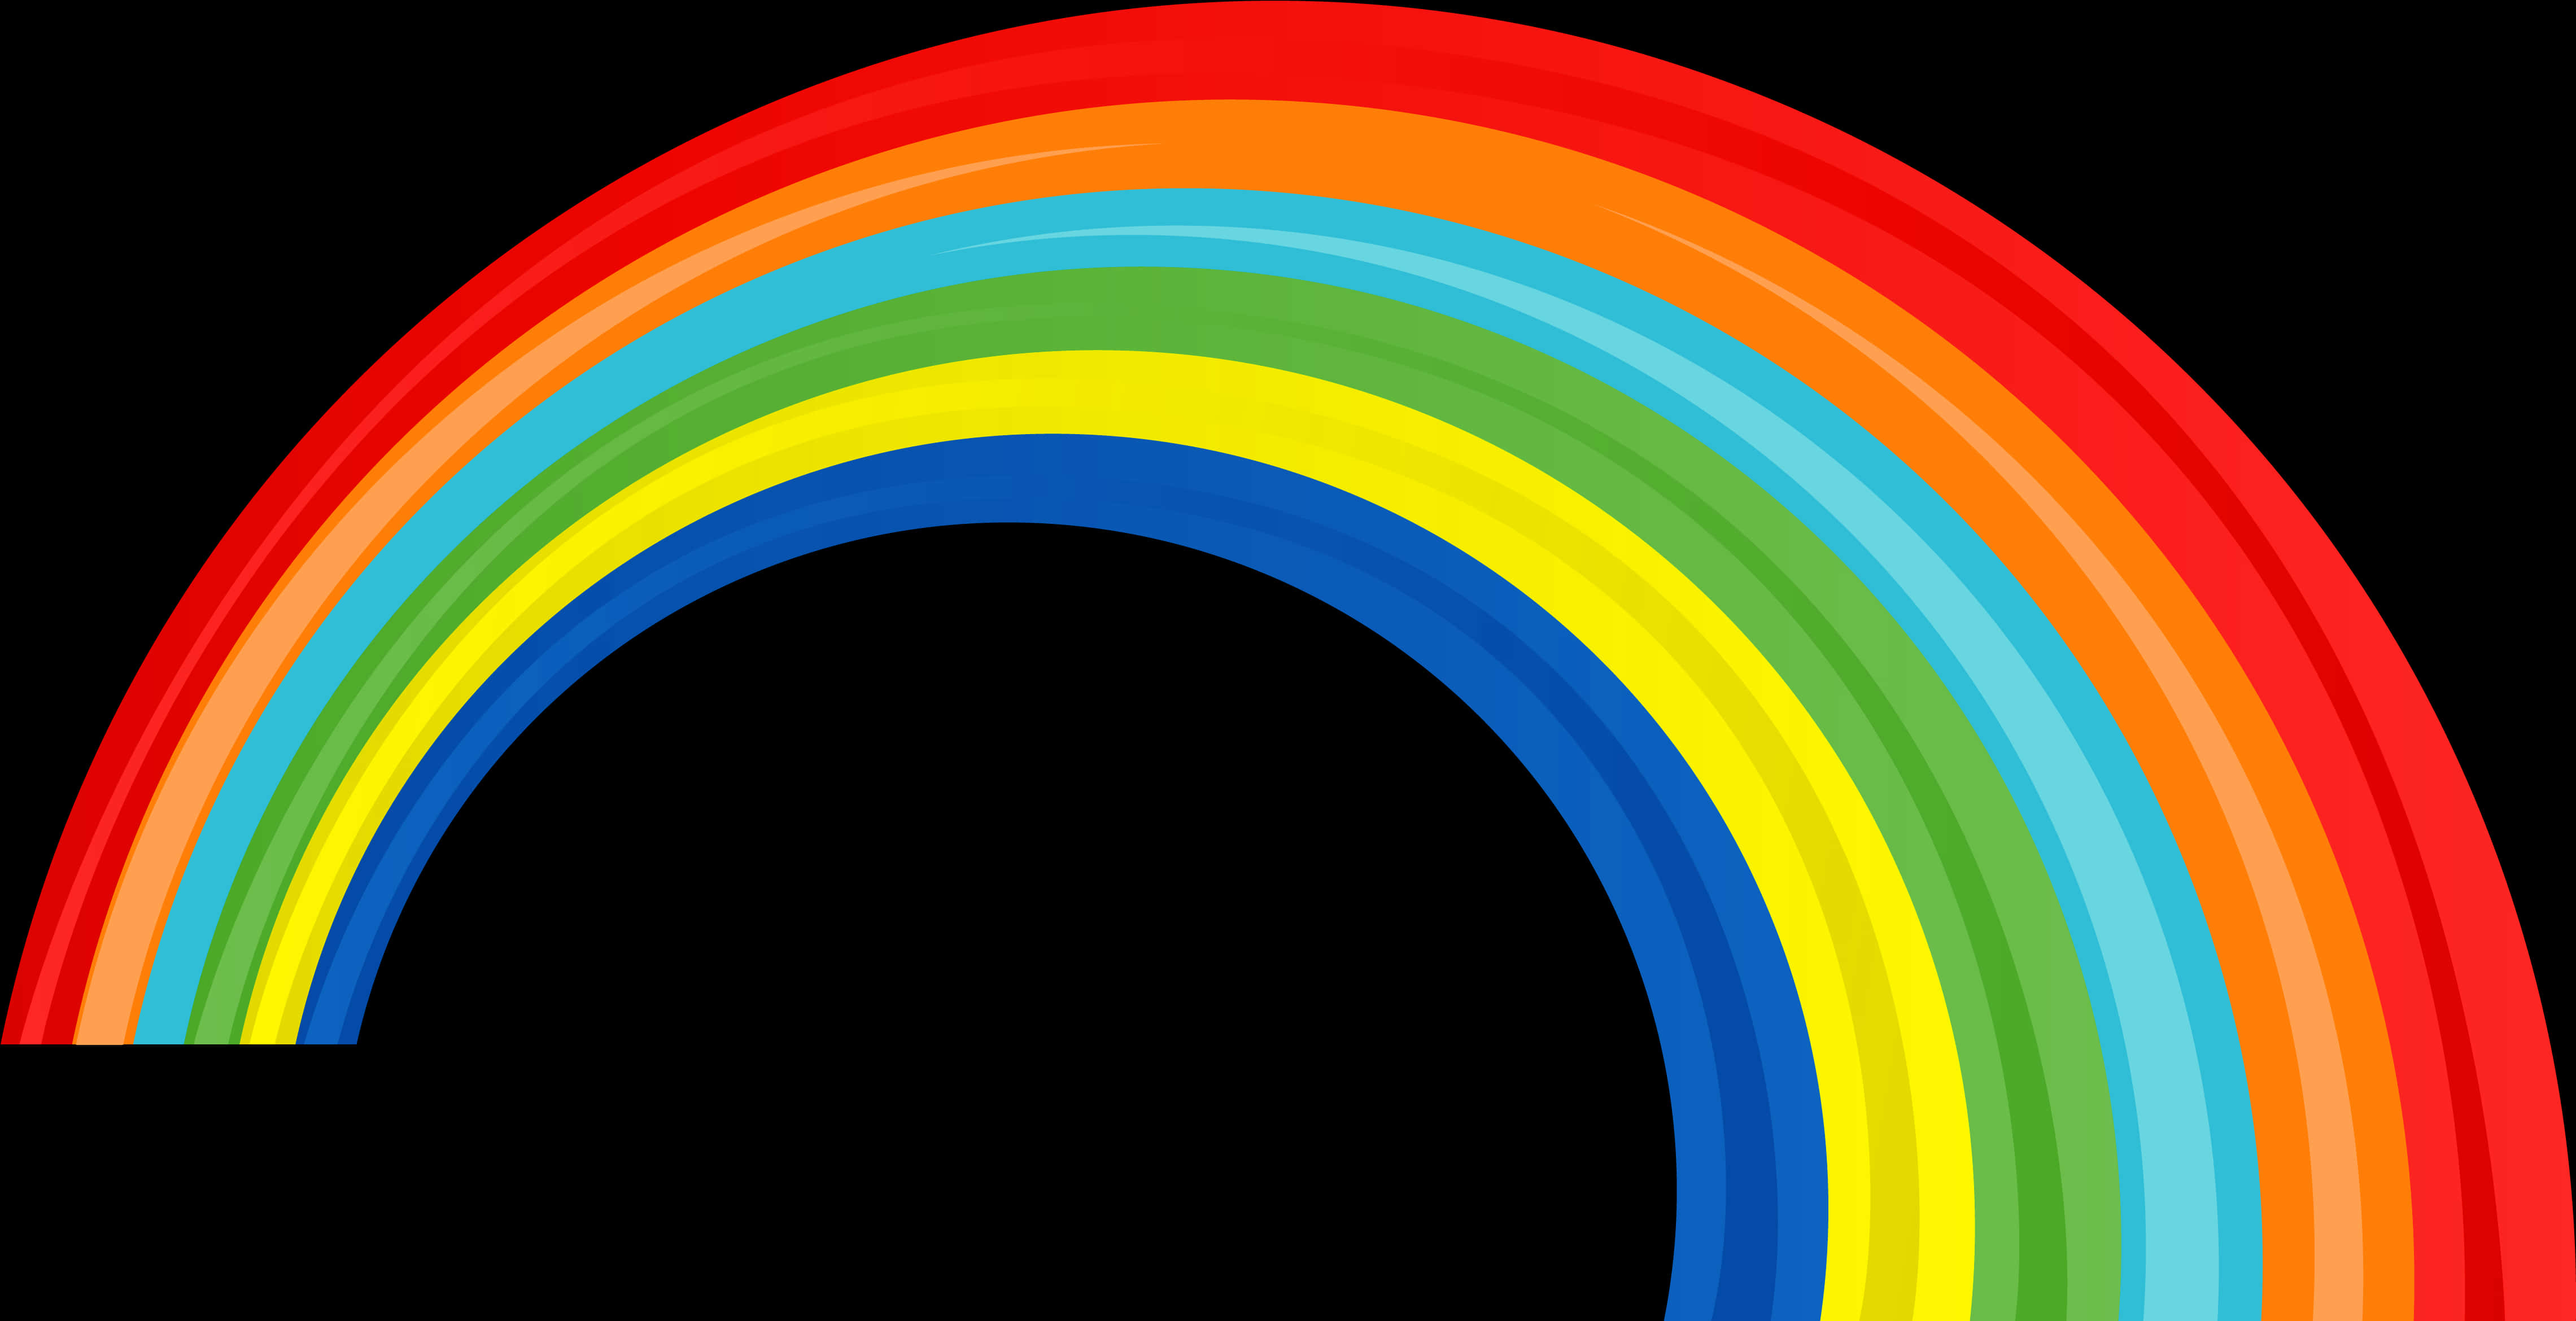 Colorful Rainbow Arc Graphic